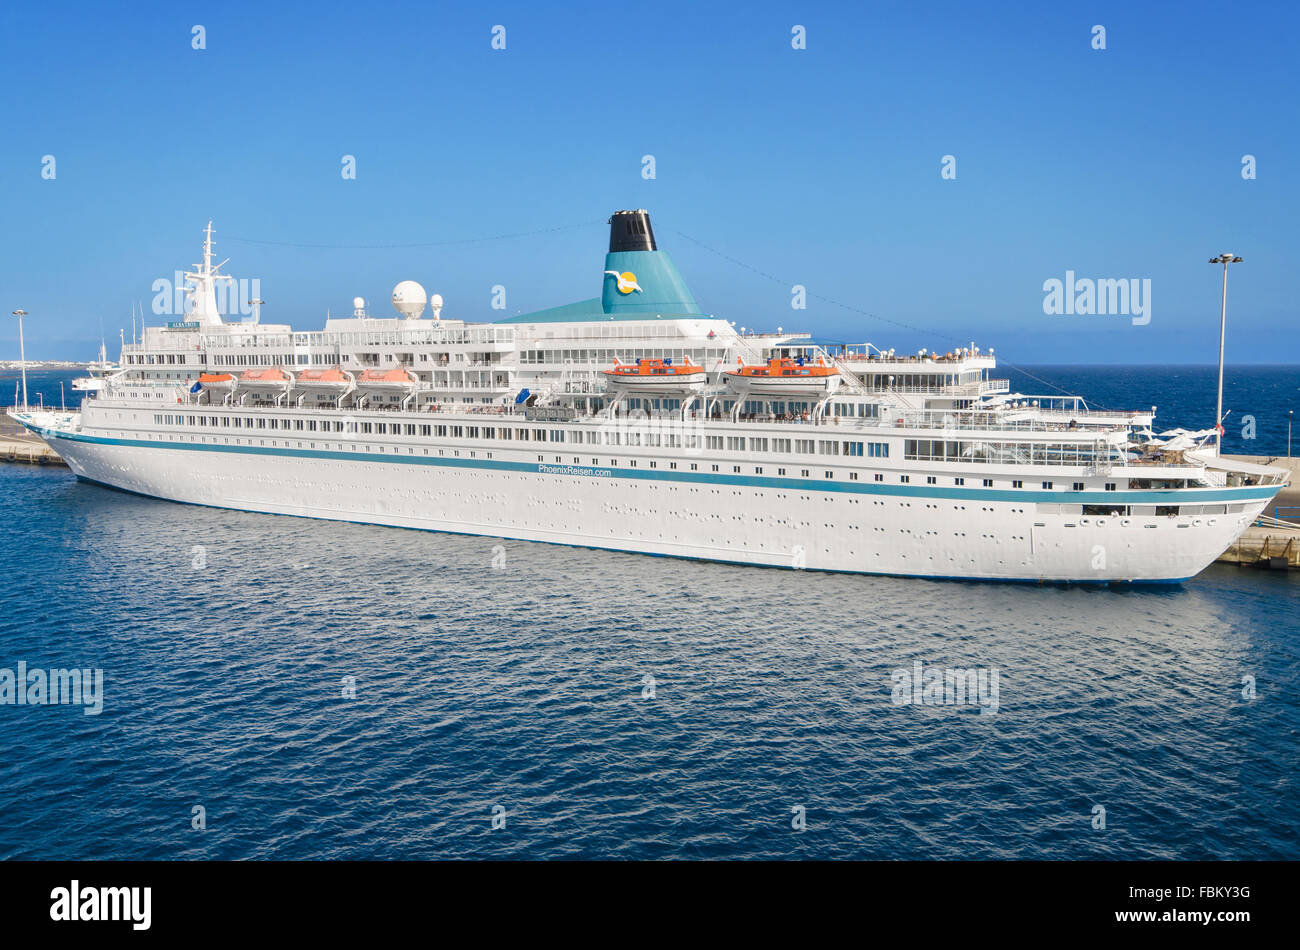 LANZAROTE, SPAIN - NOVEMBER 9: Albatros passanger cruise ship in Lanzarote harbor on November 9, 2015, Lanzarote, Canary island. Stock Photo